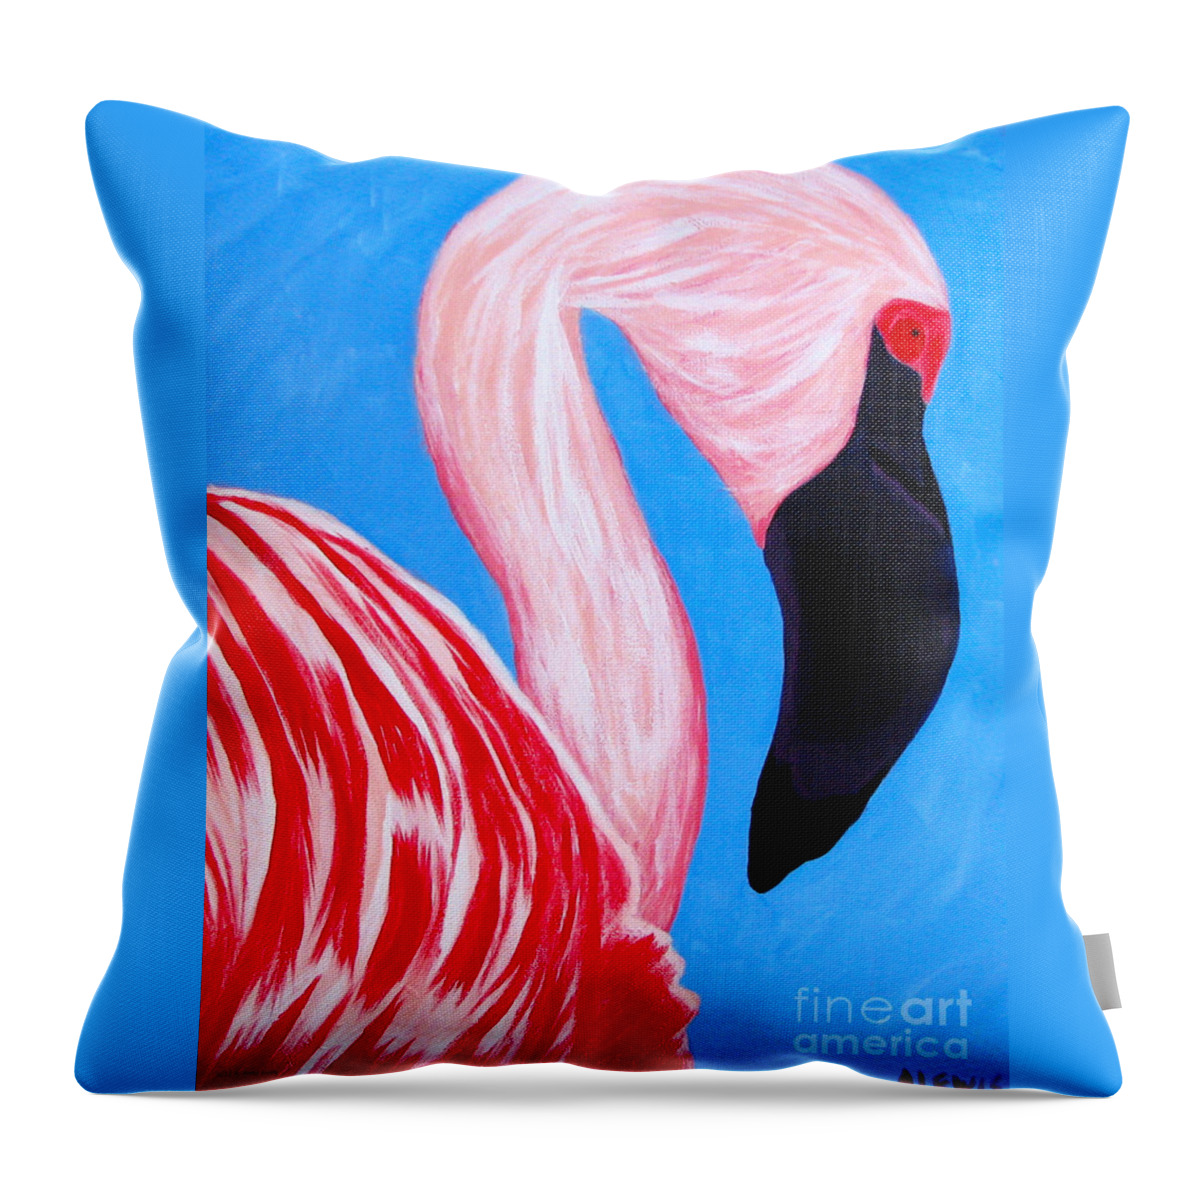 Crimson Flamingo Throw Pillow featuring the painting Crimson Flamingo by Anita Lewis